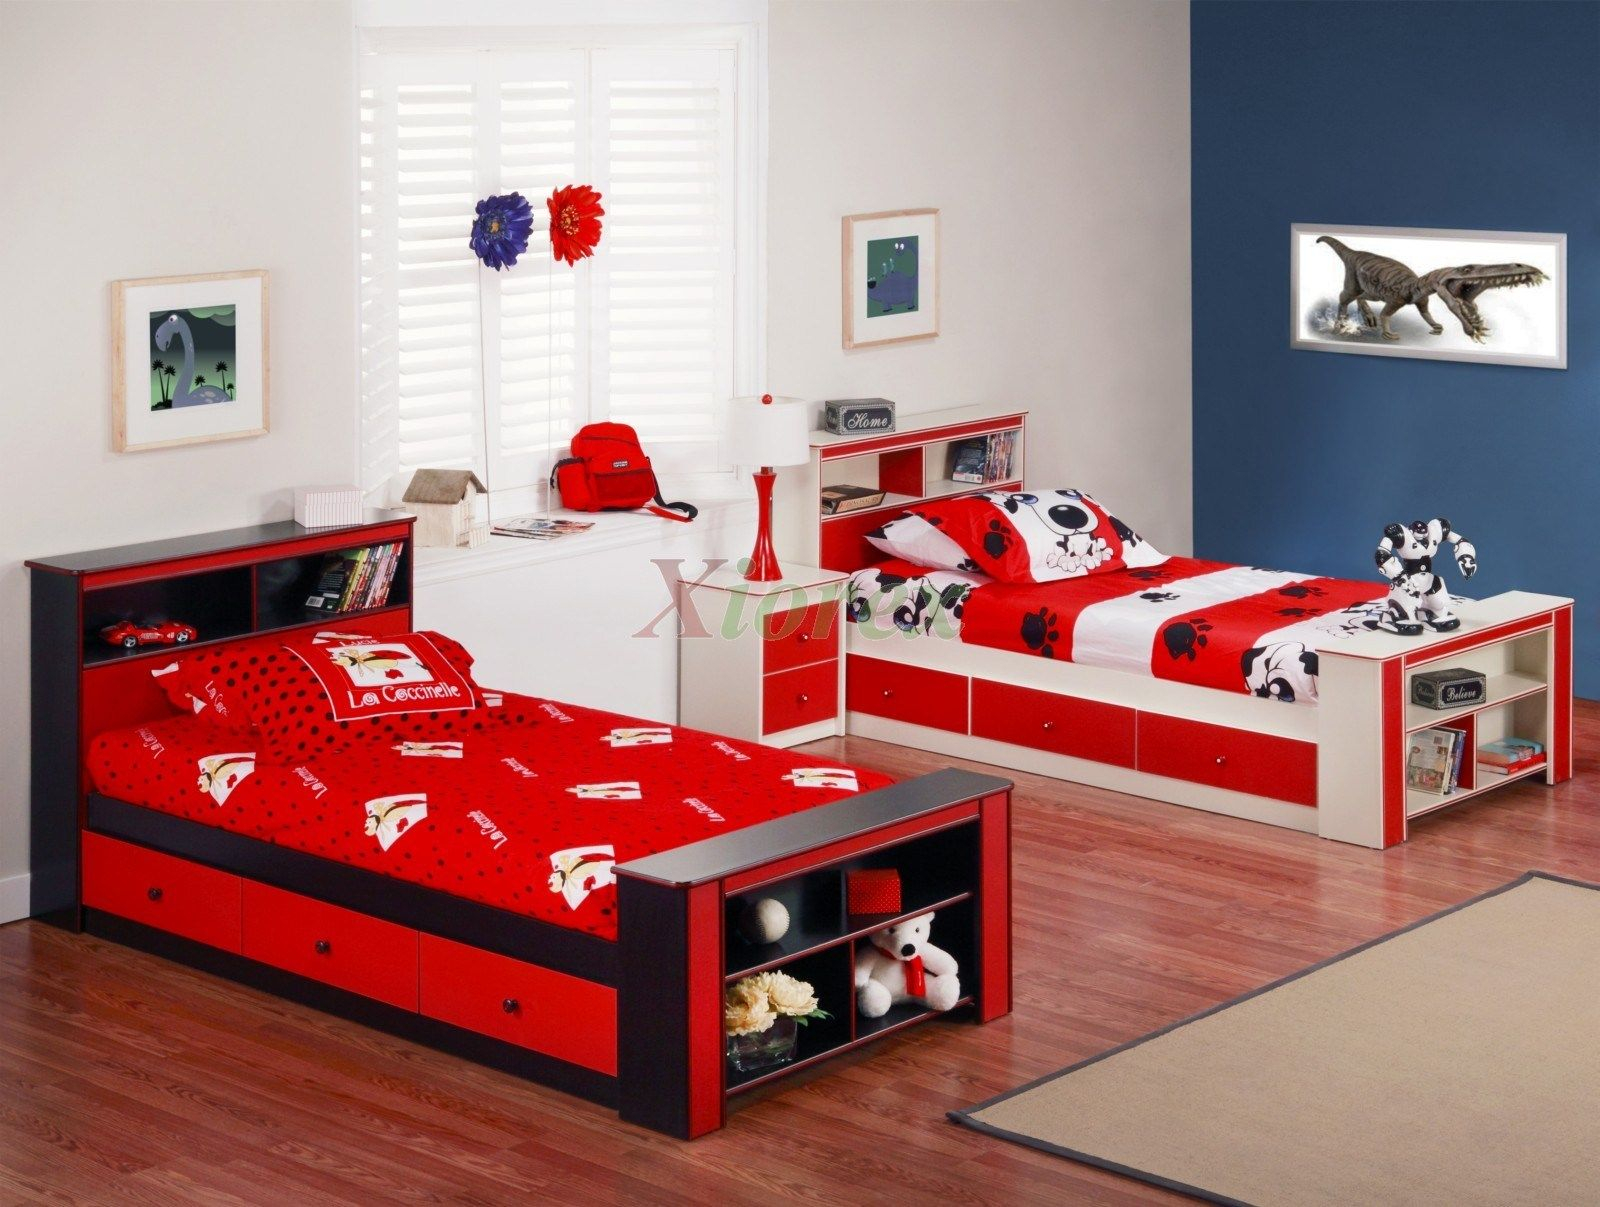 30 Wonderful Image Of Kids Bedroom Furniture Boys Kids Room Twin pertaining to sizing 1600 X 1207